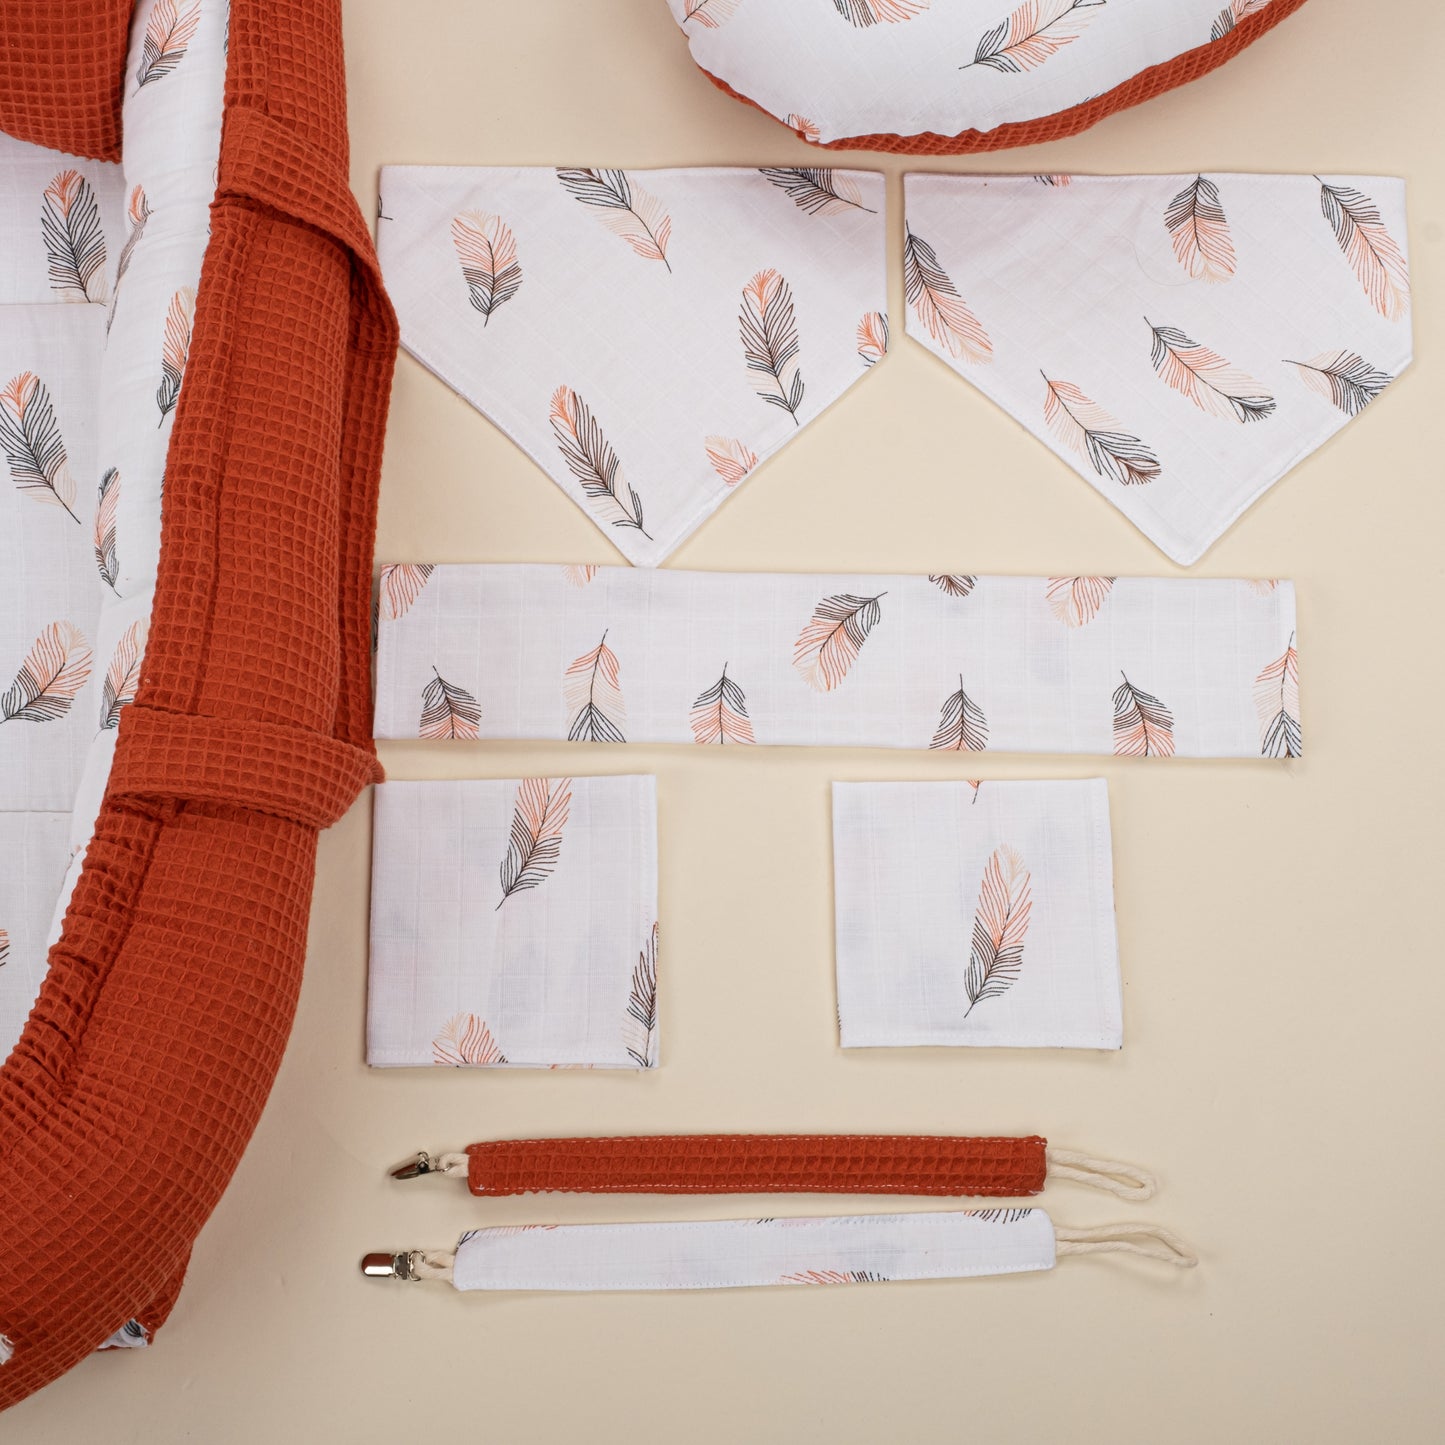 15 Piece Full Set - Newborn Sets - Tile Honeycomb - Orange Feather